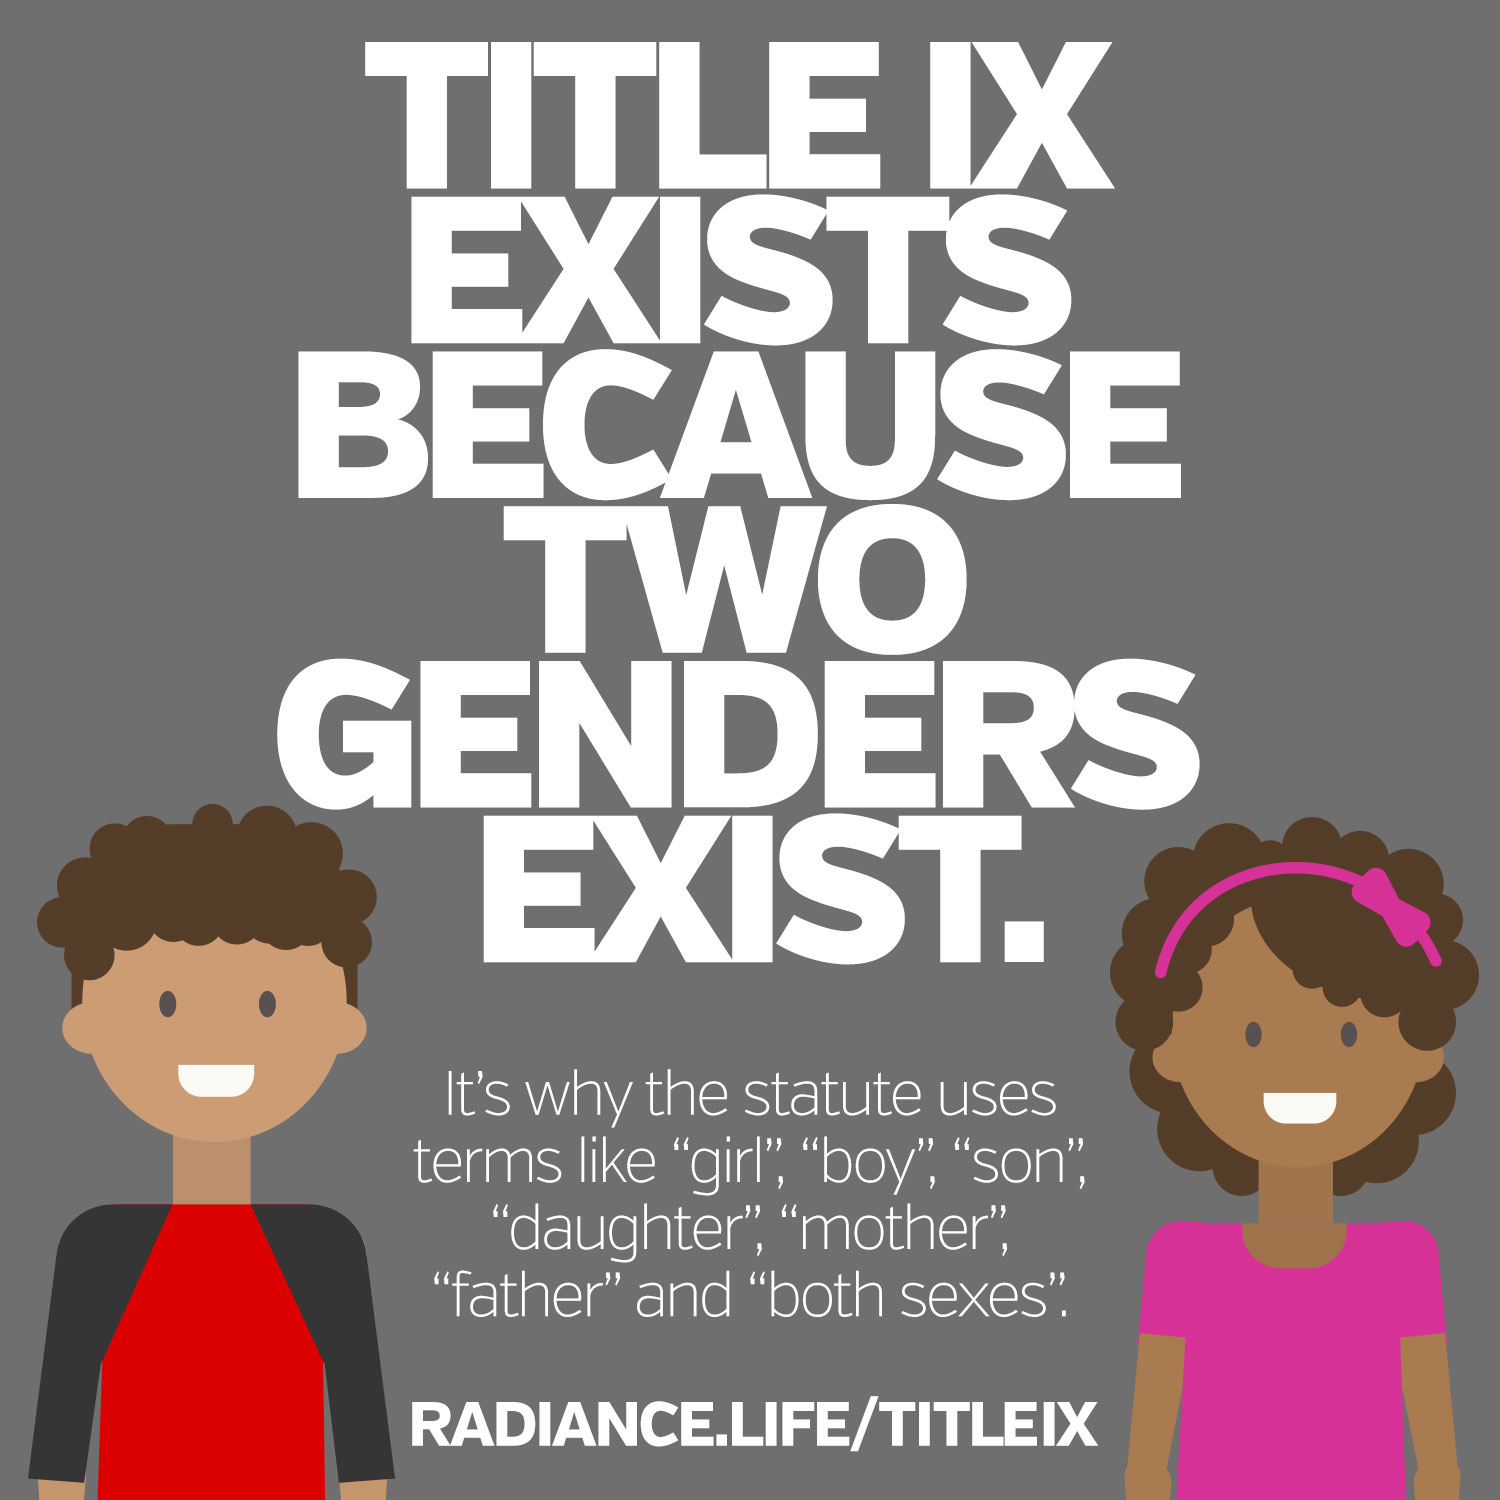 TITLE IX - The Radiance Foundation